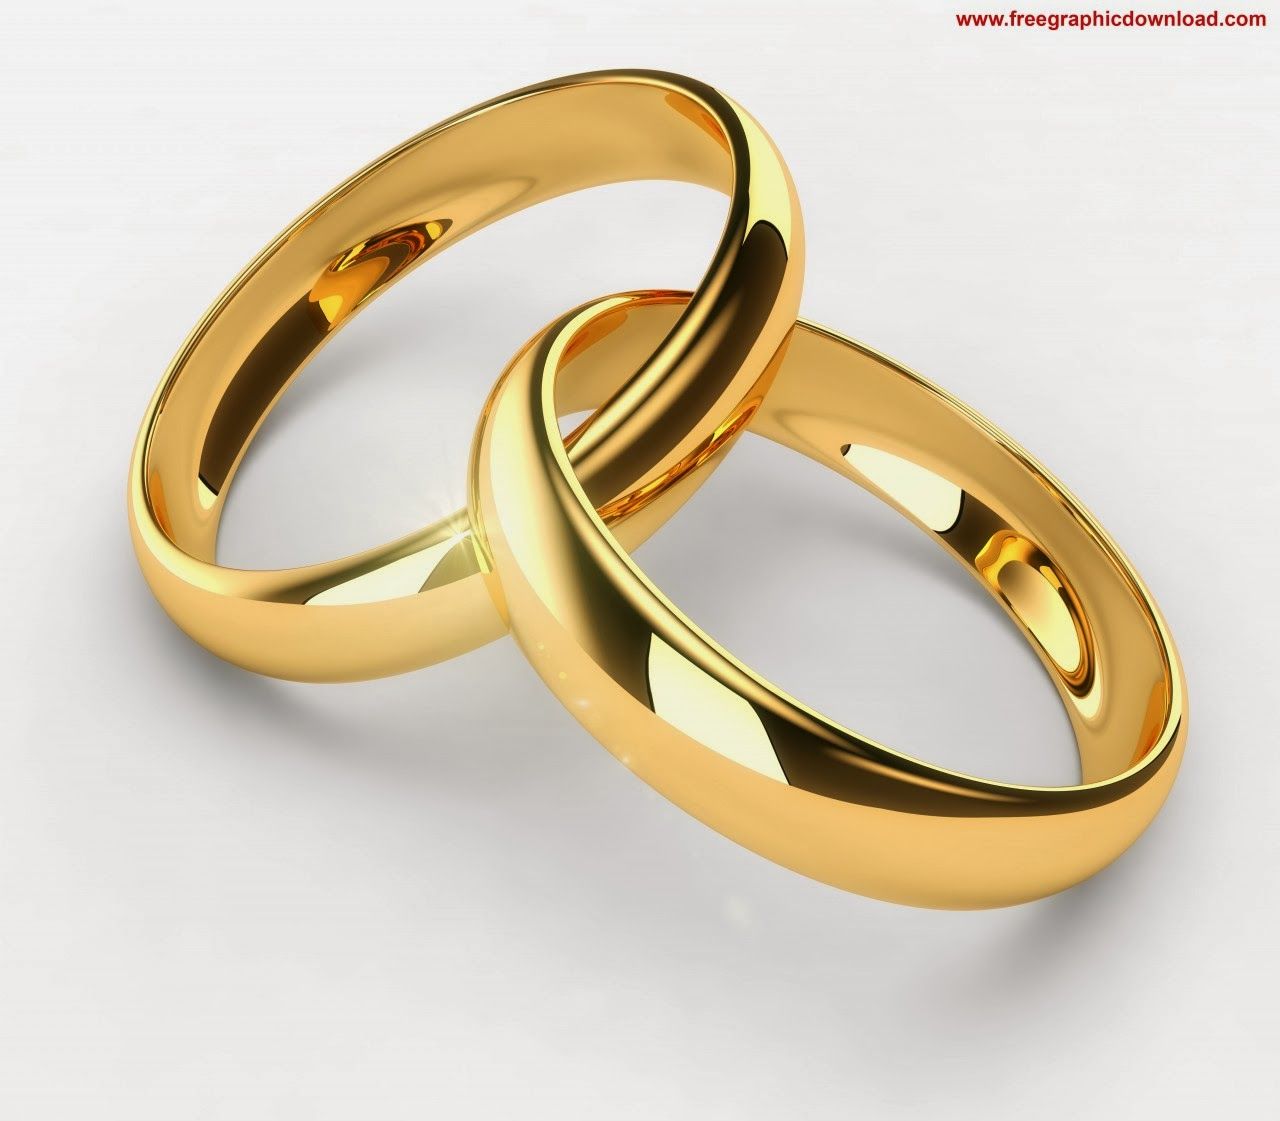 Wedding Ring Intertwined - HD Wallpaper 